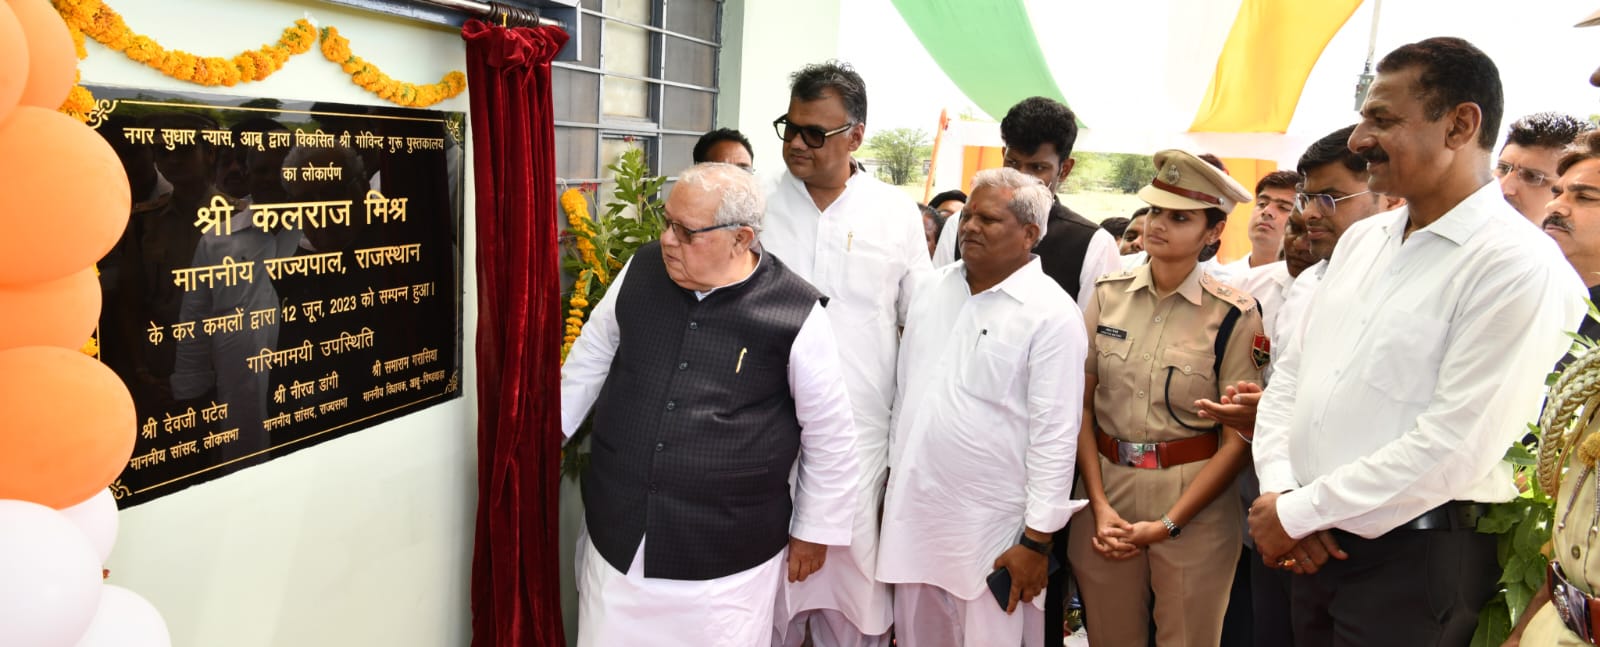 Hon'ble Governor has inaugurated Govind Guru Library at Abu Road 